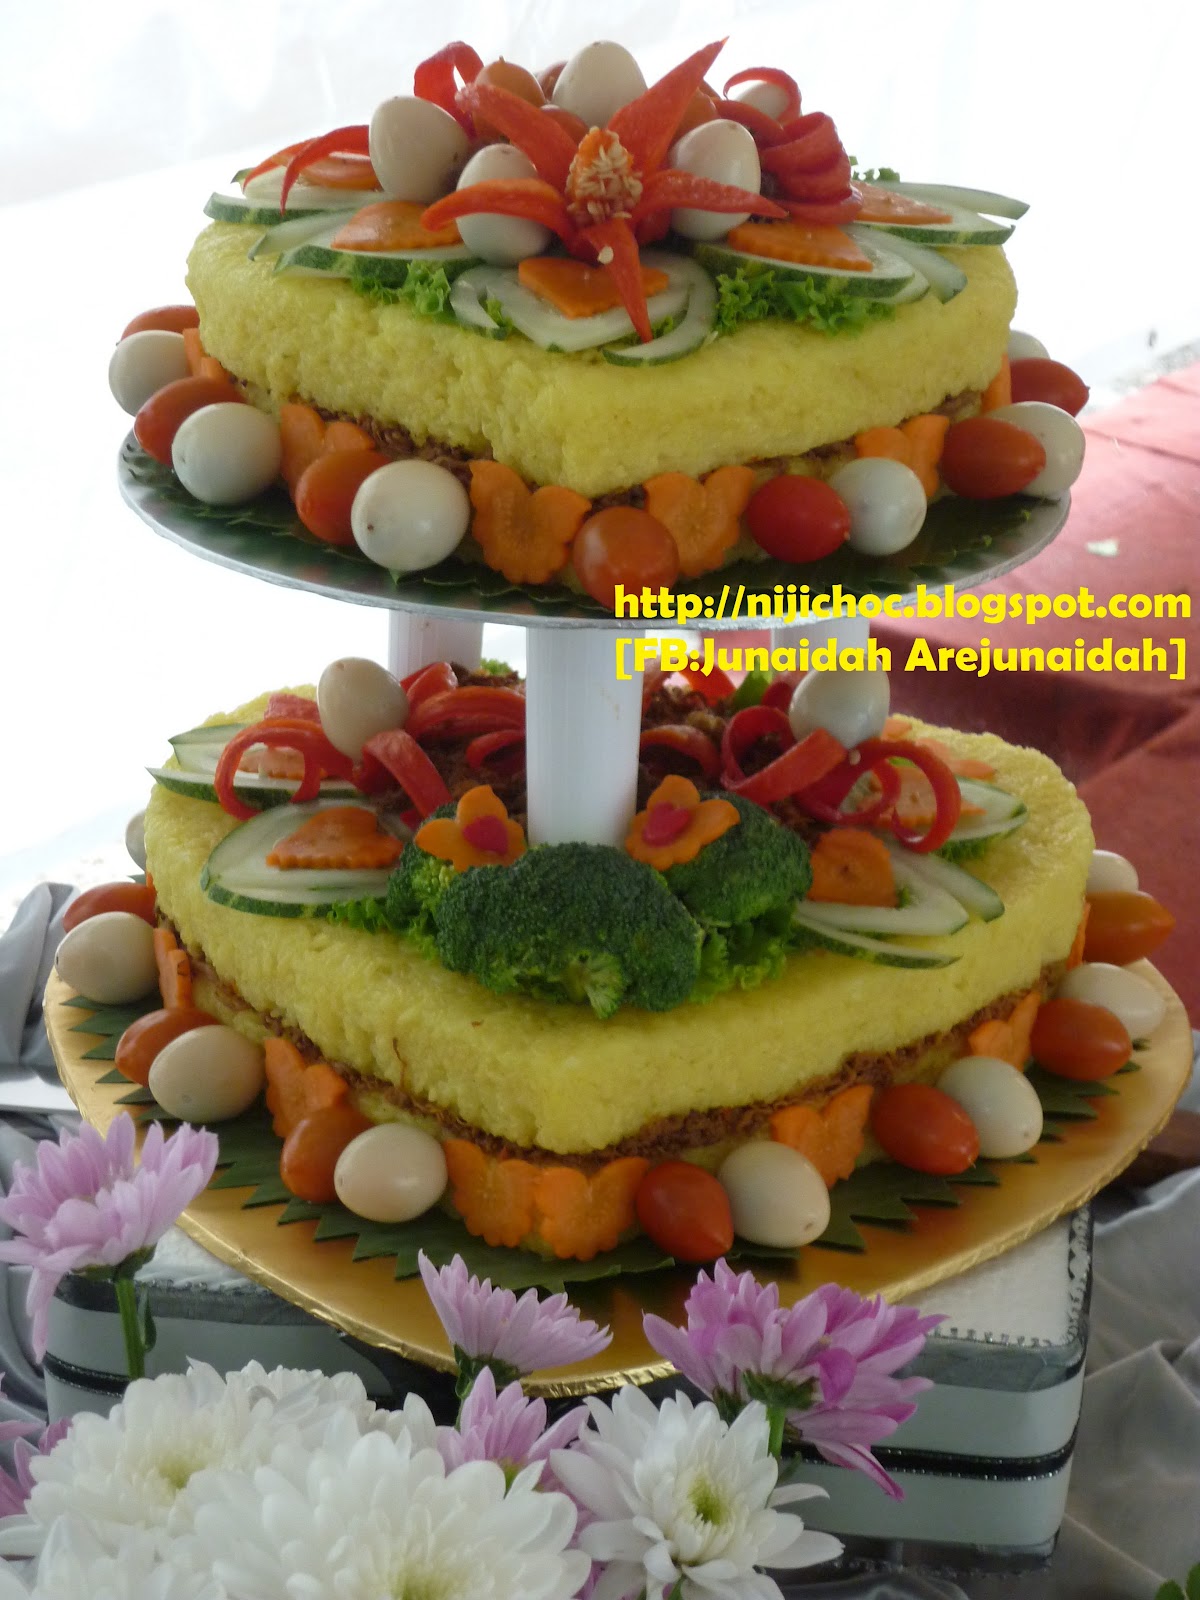 Niji Choc Alhamdulillah kek pulut kuning   